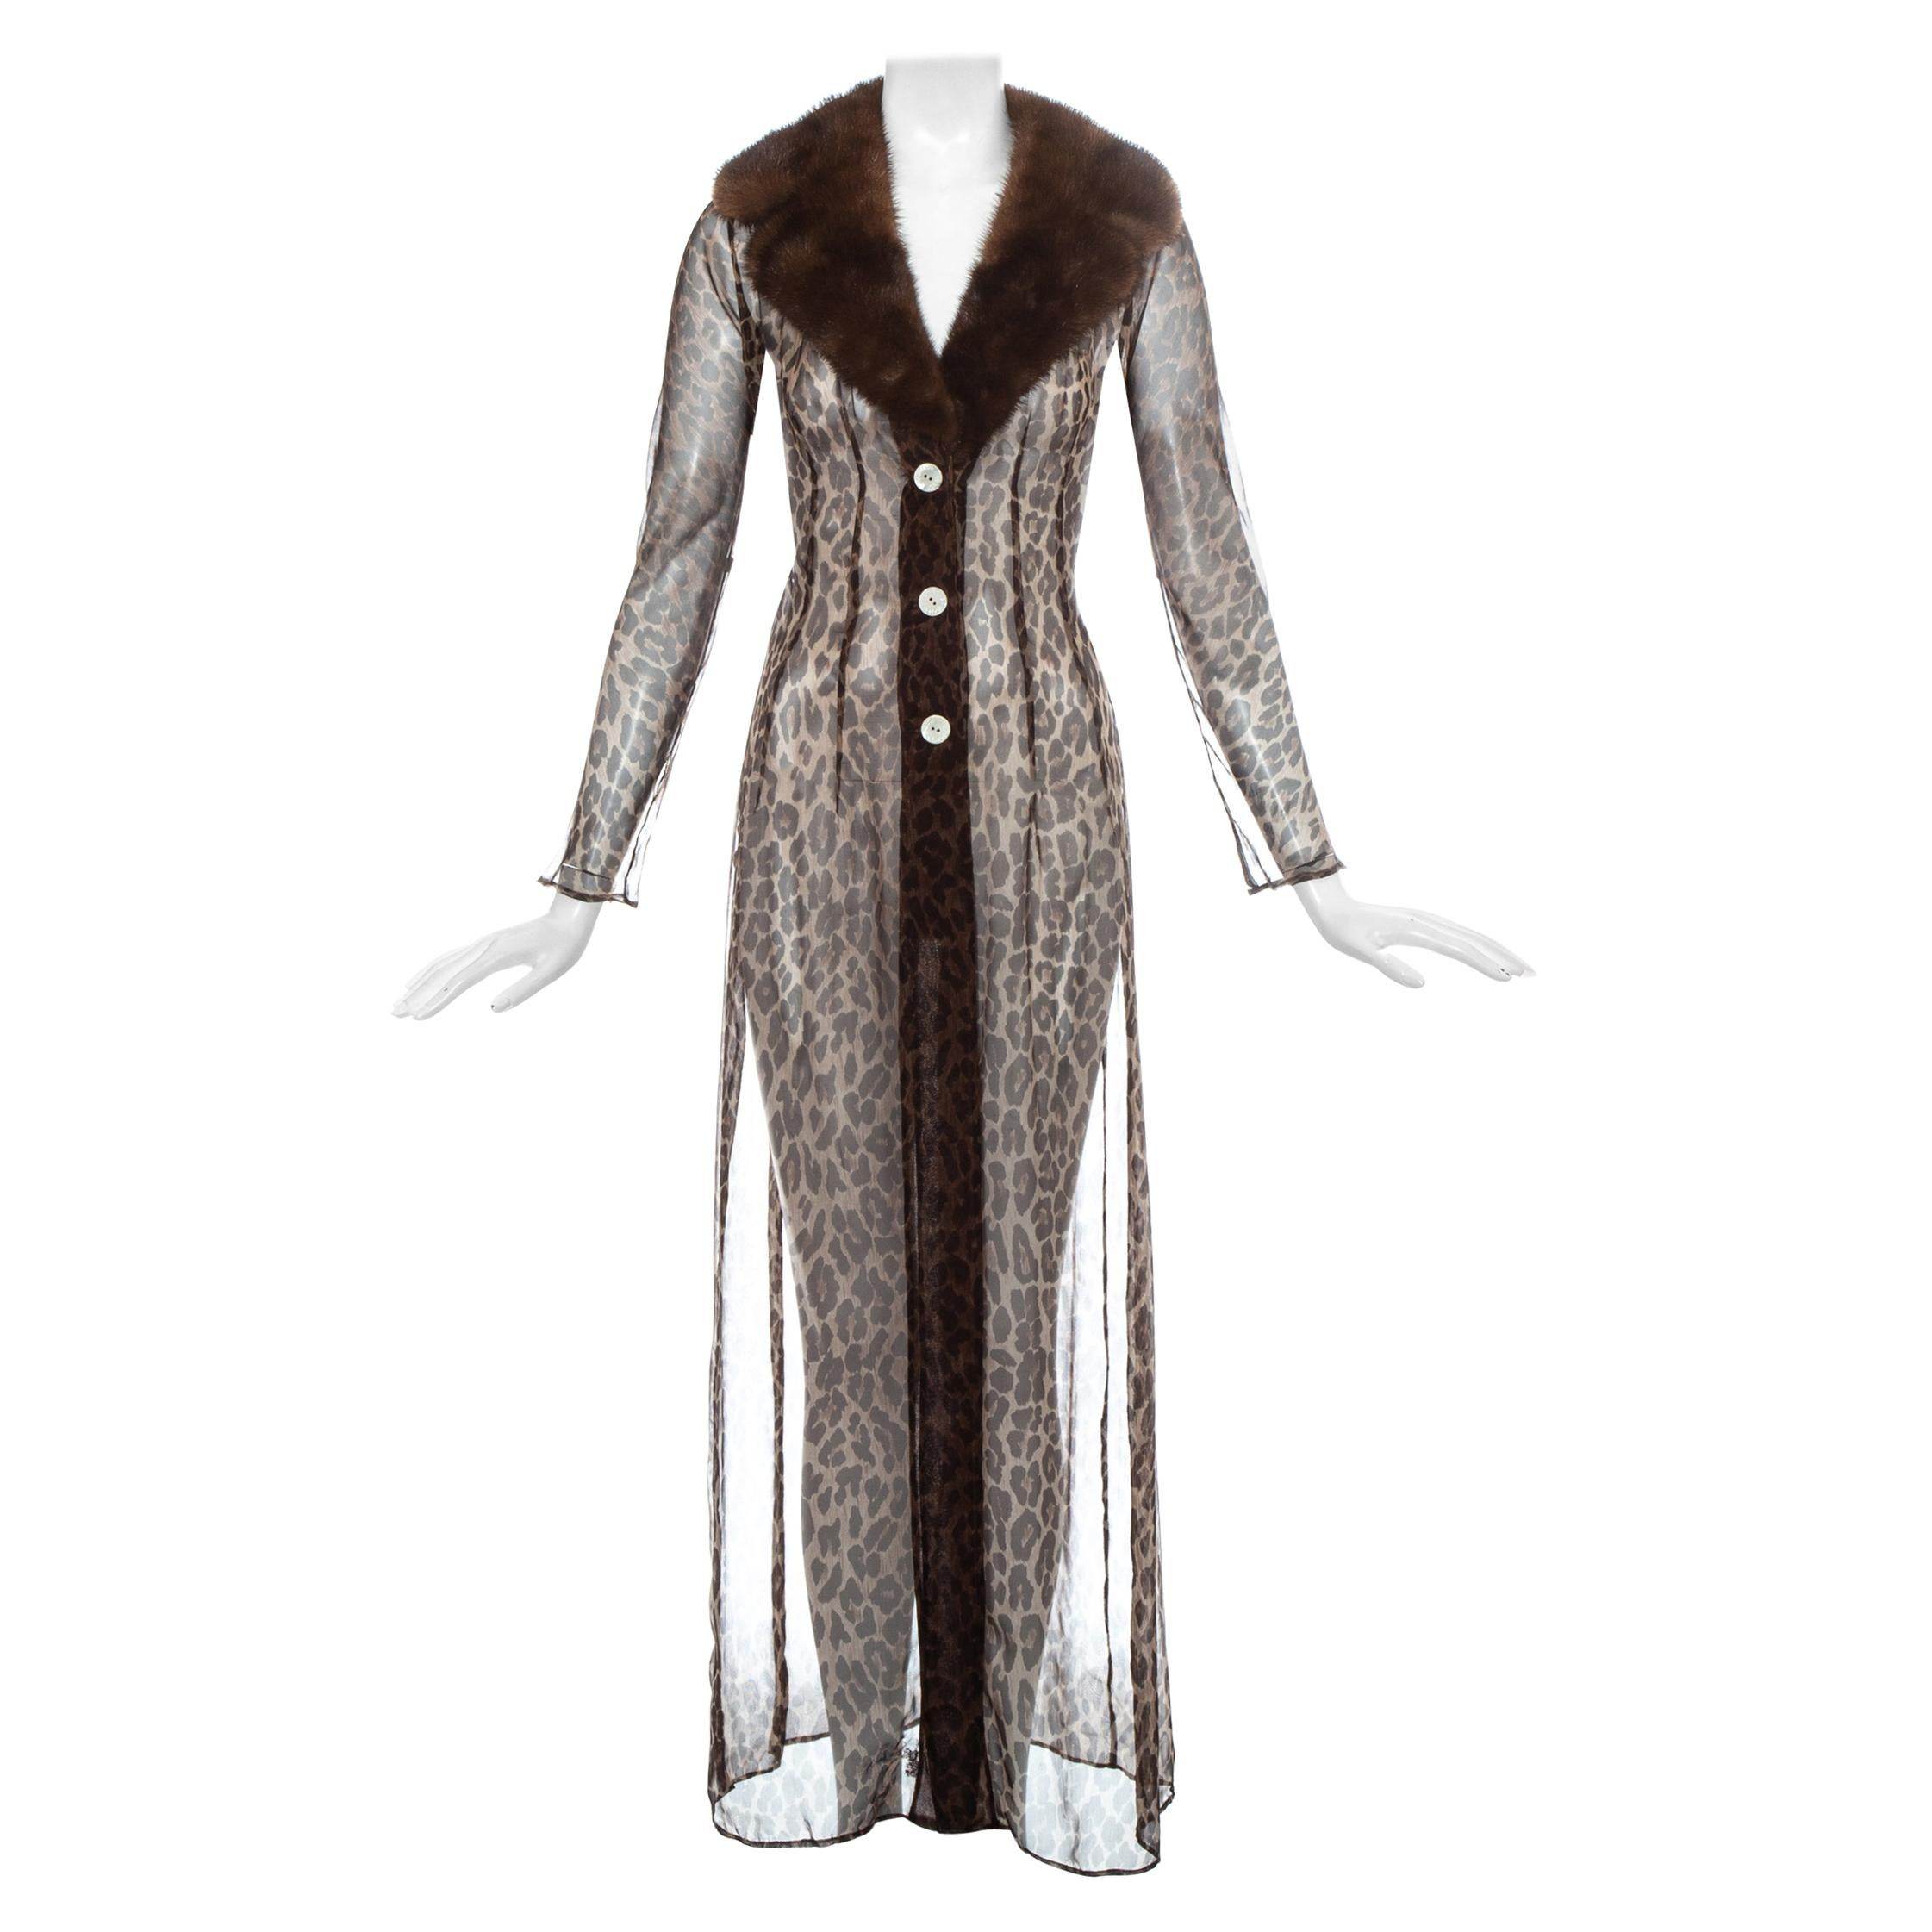 Dolce & Gabbana leopard print silk chiffon coat with mink fur collar, ss 1997